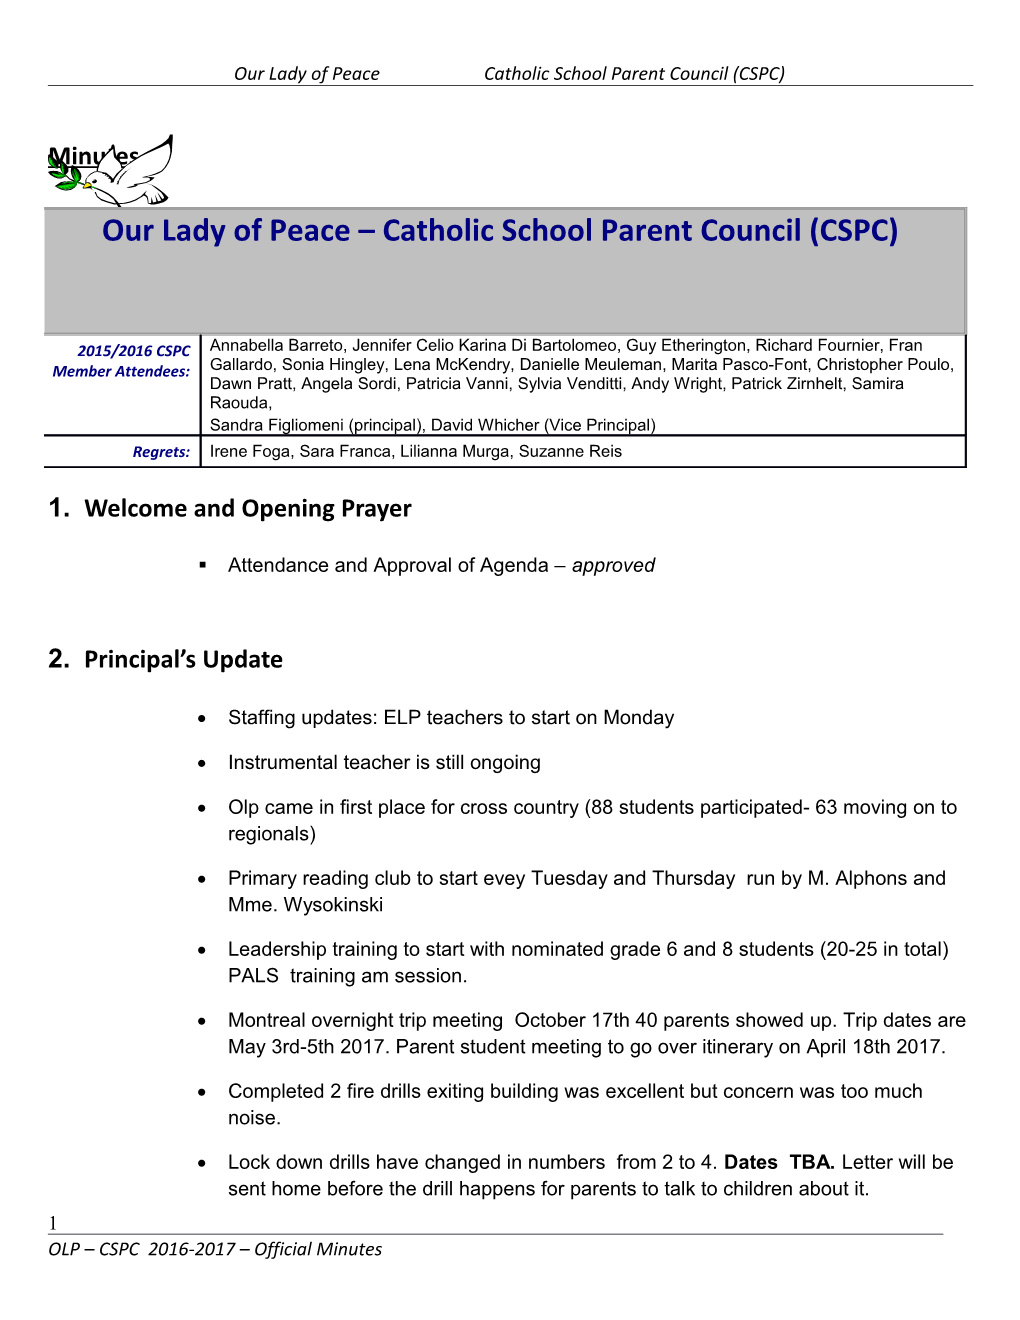 Our Lady of Peace Parent Advisory Council